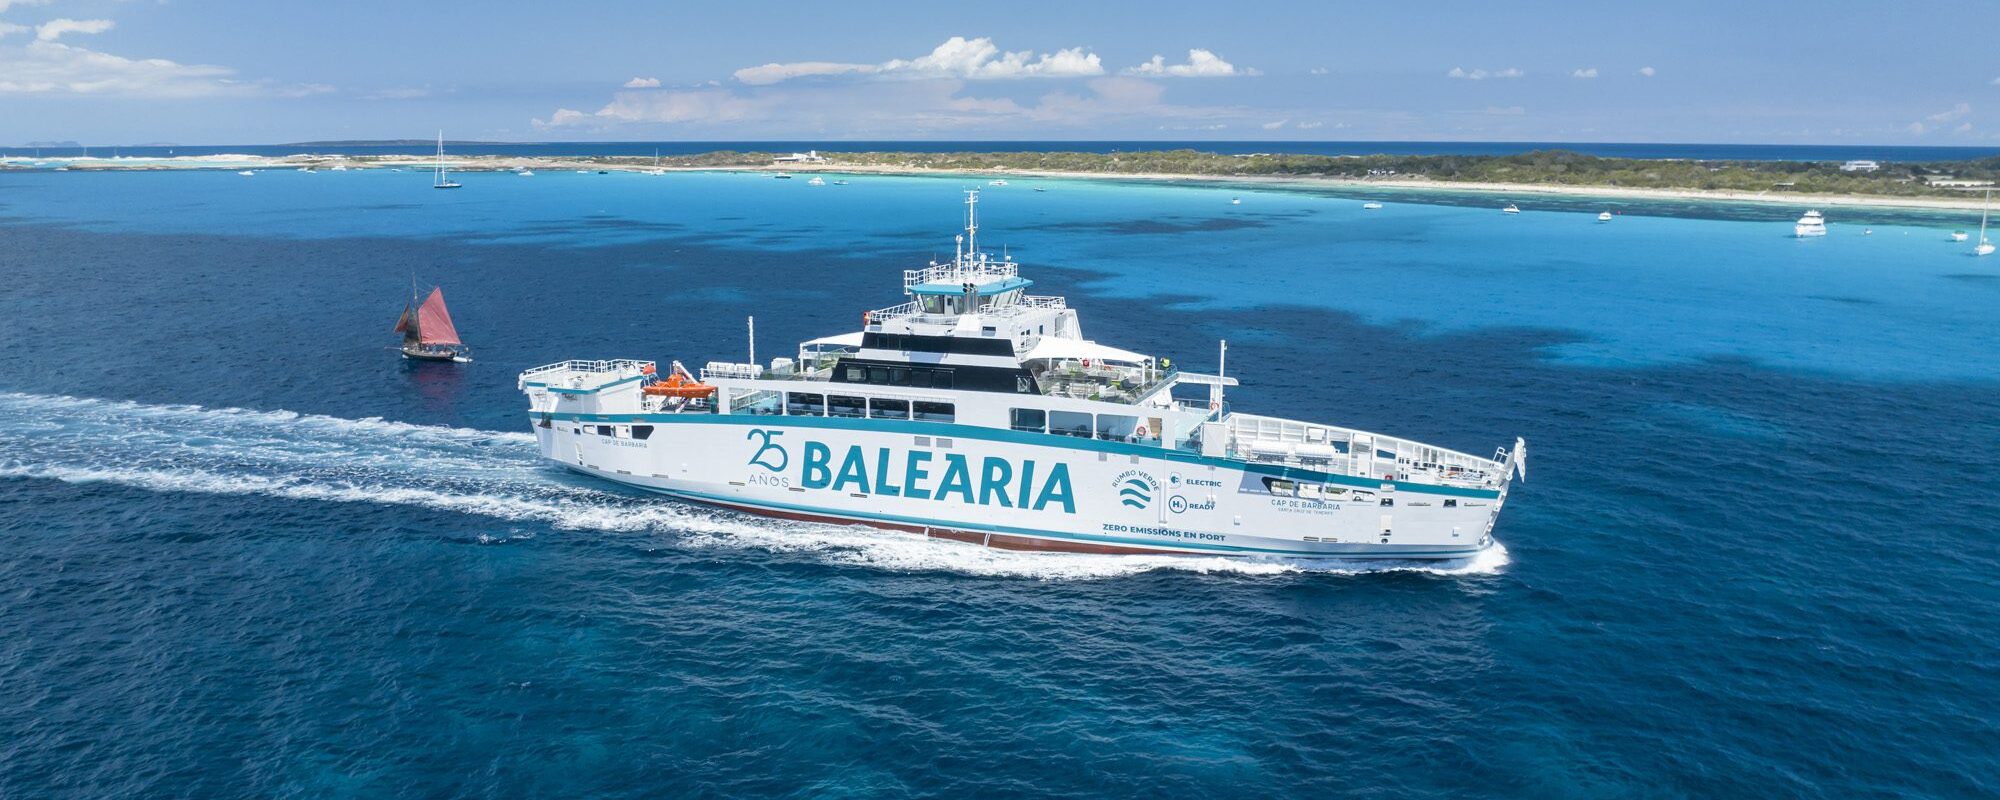 ferry-cap-de-barbaria-primer-ferry-electrico-balearia-4